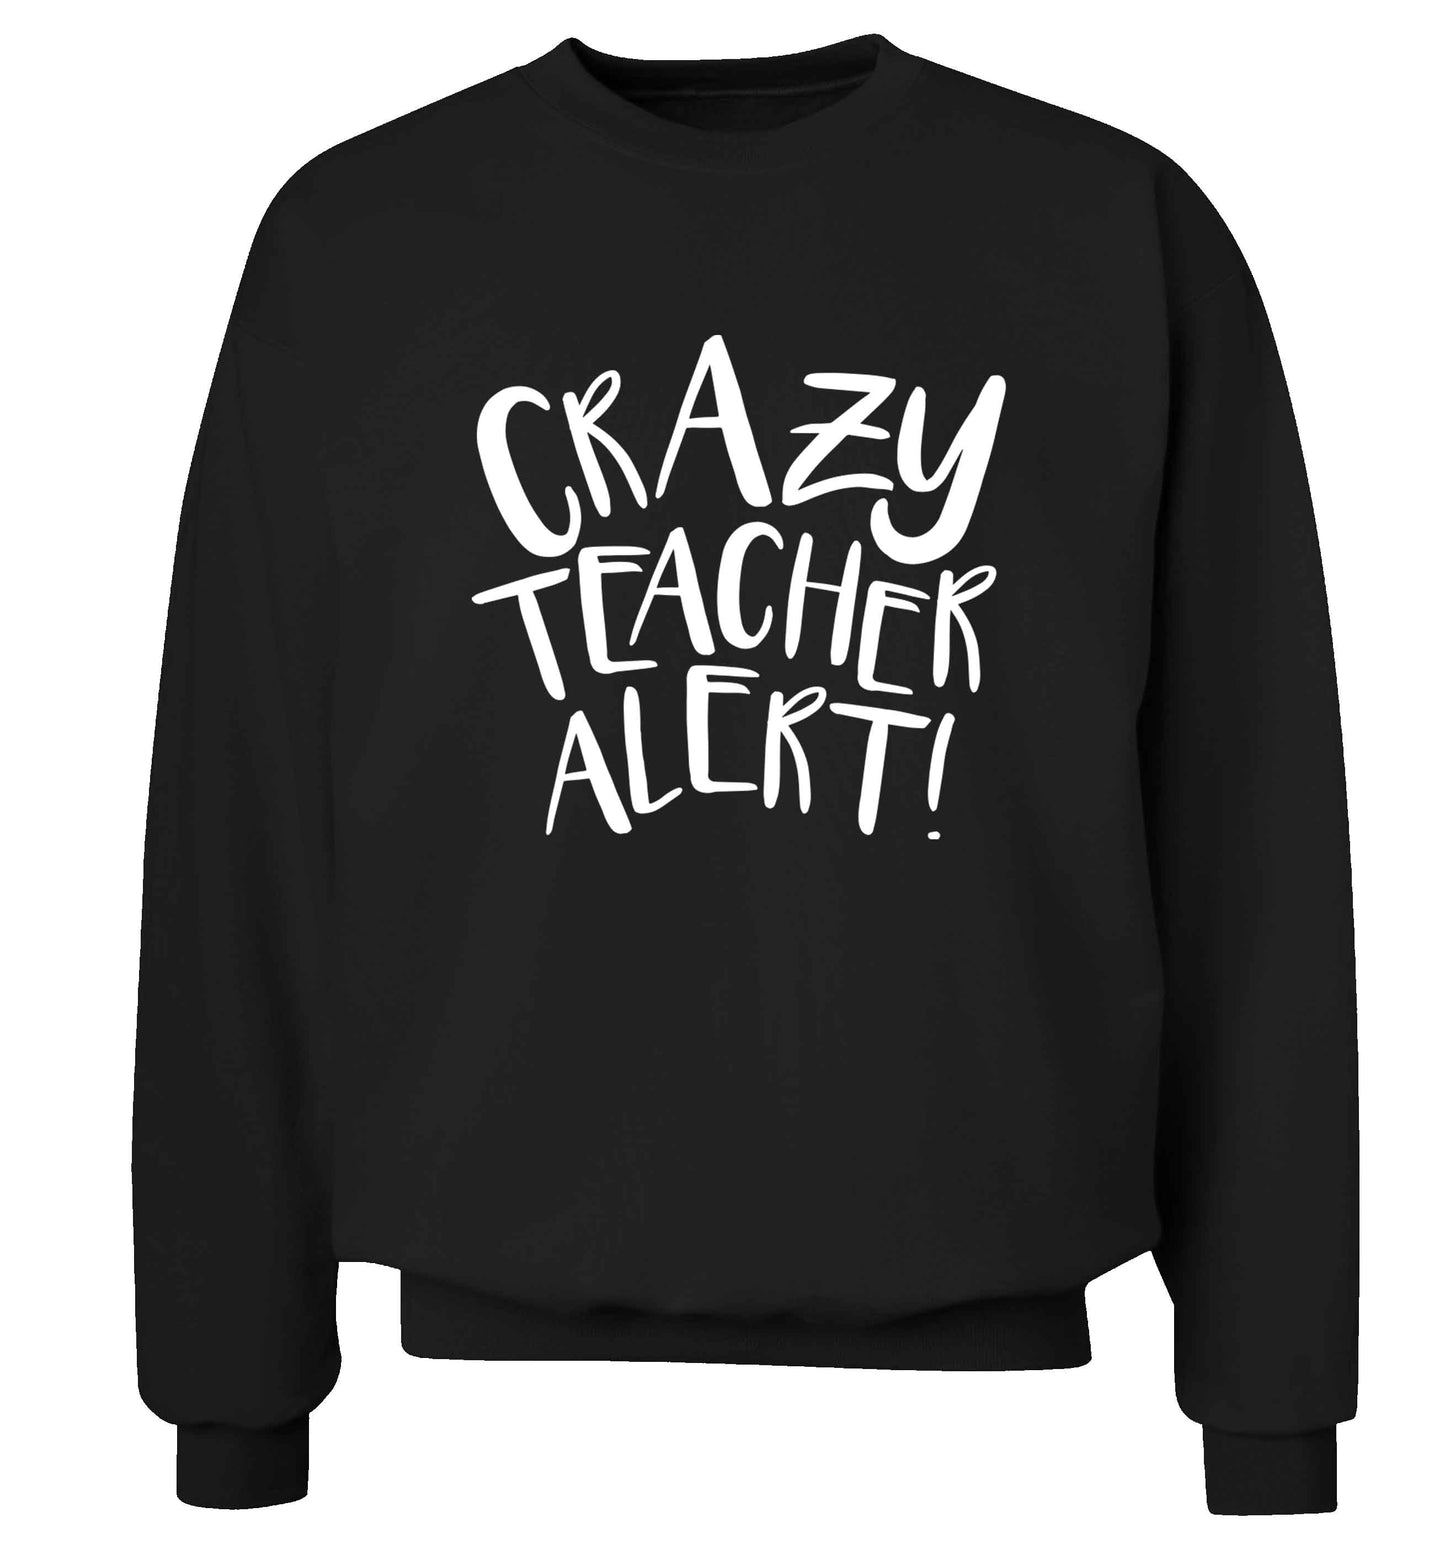 Crazy teacher alert adult's unisex black sweater 2XL